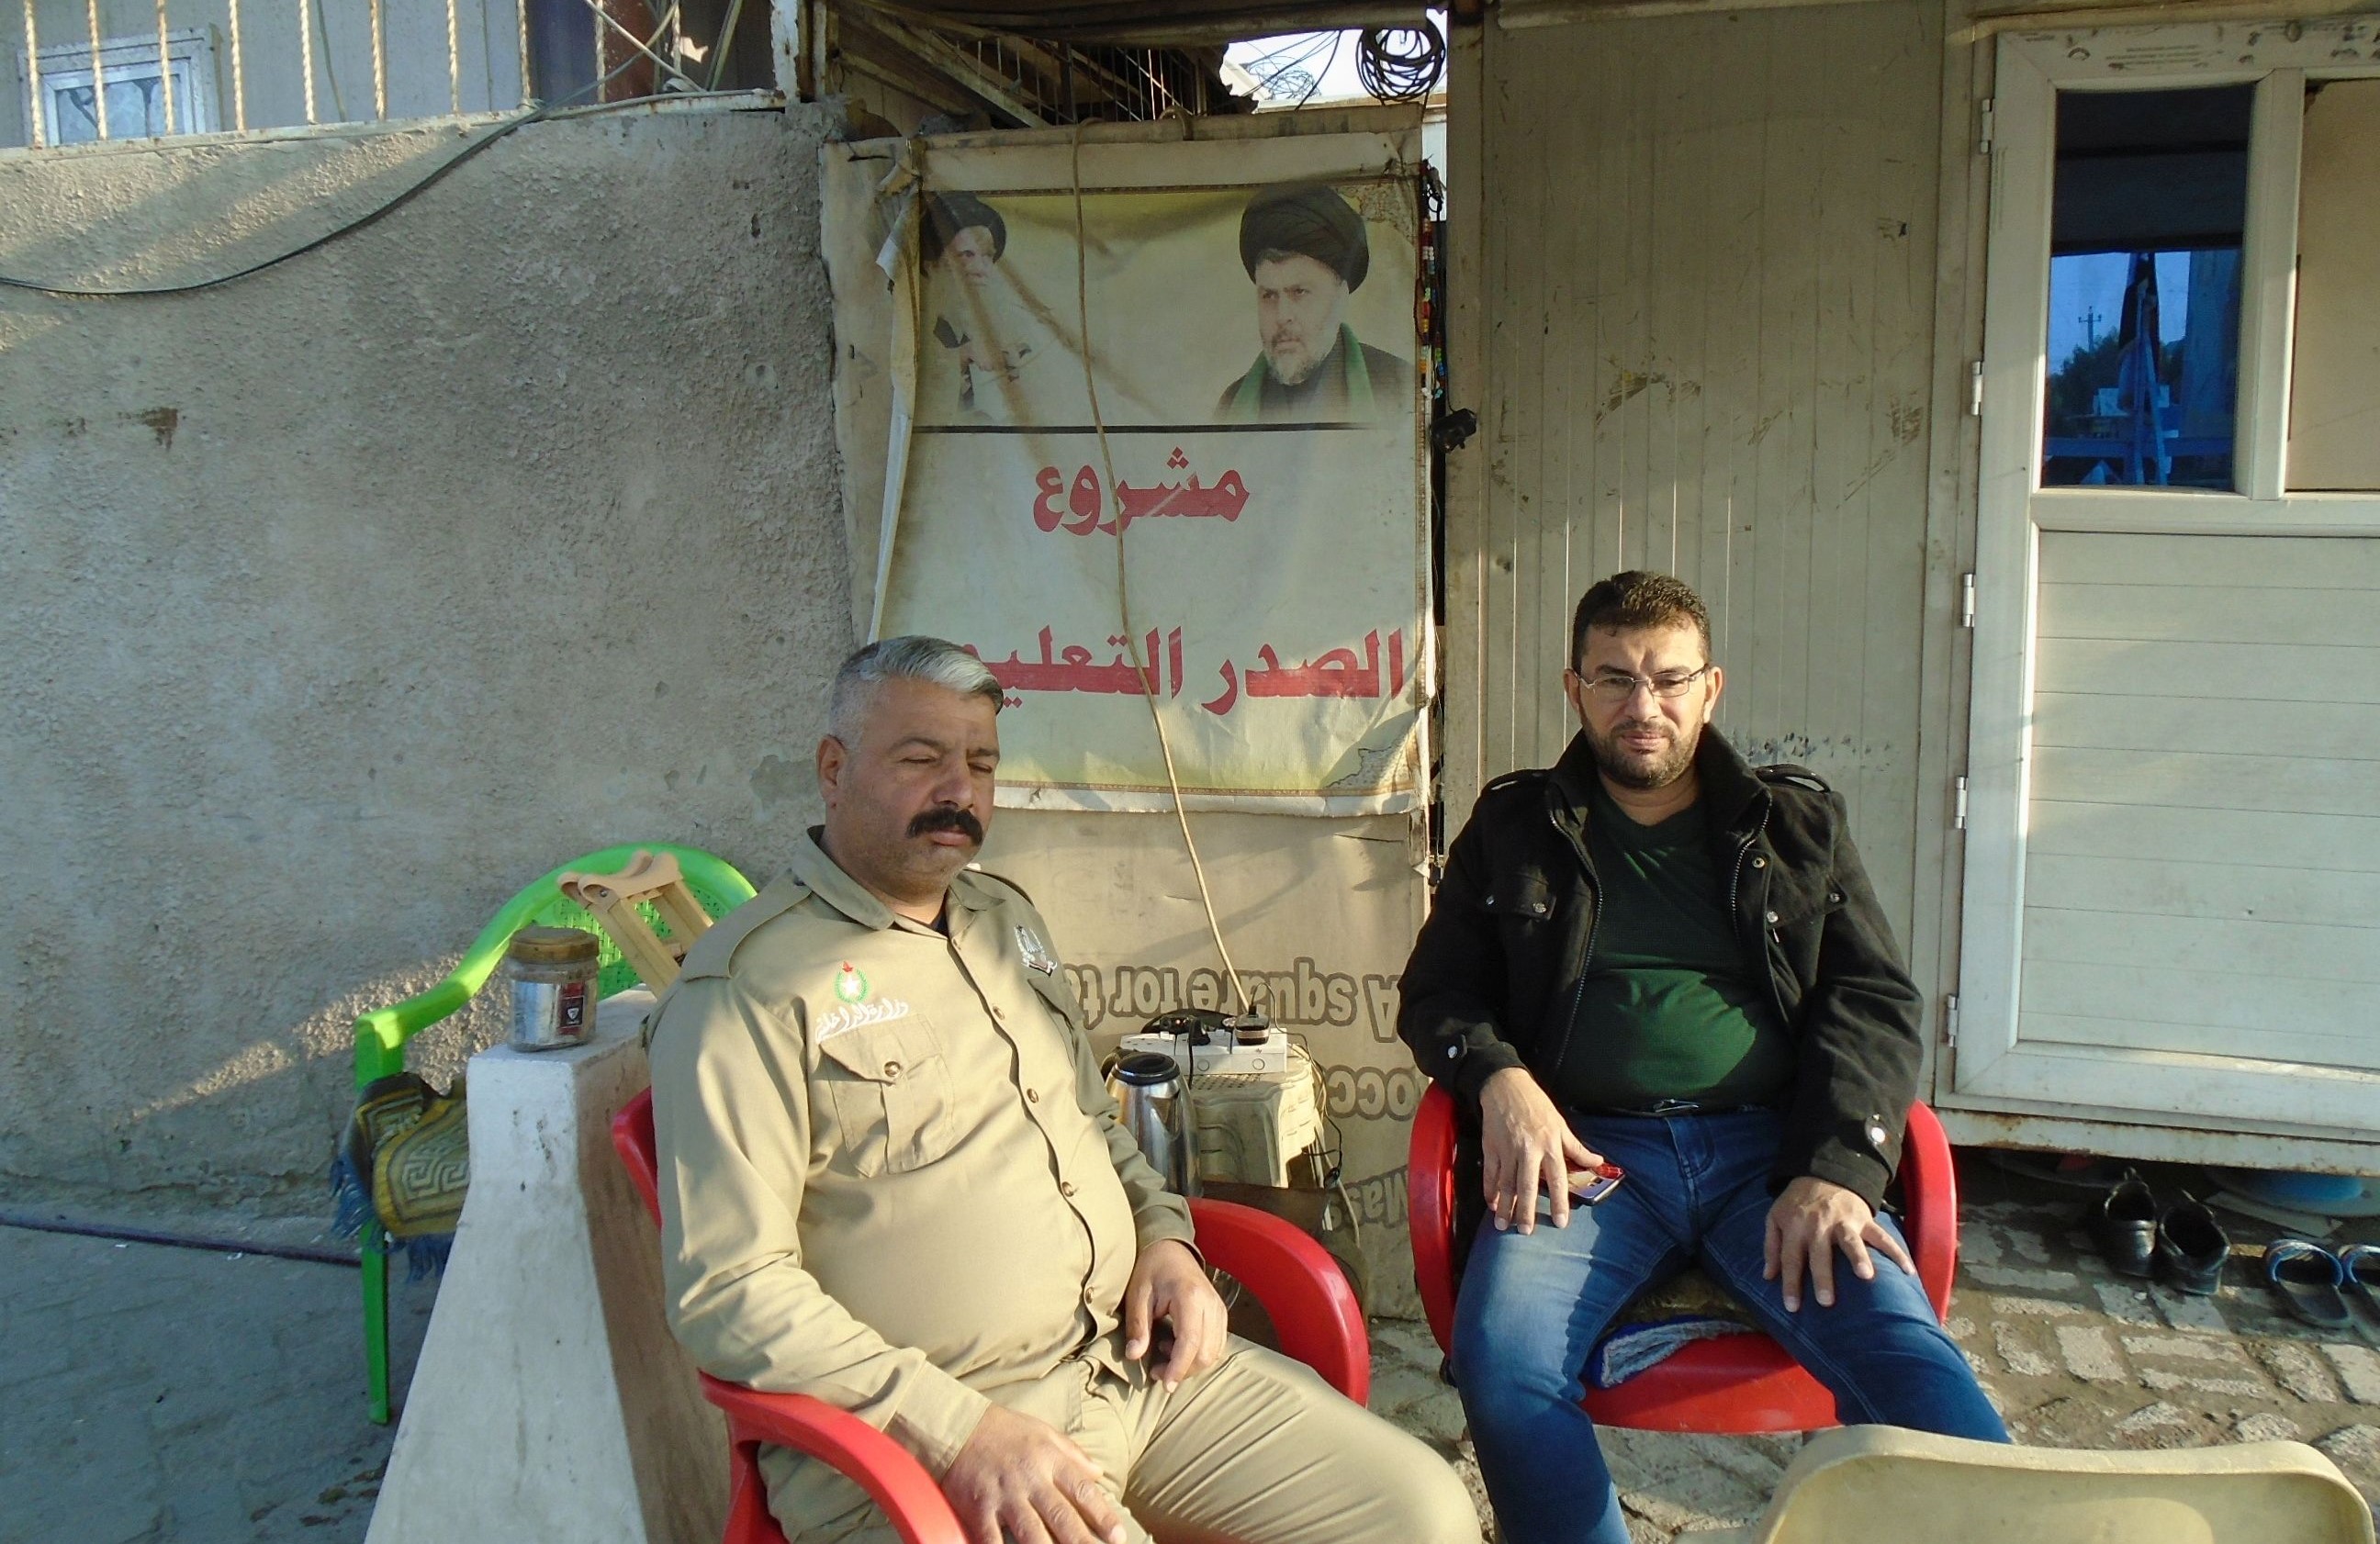 Security guards outside the Muqtada al-Sadr media centre (photo: Birgit Svensson)